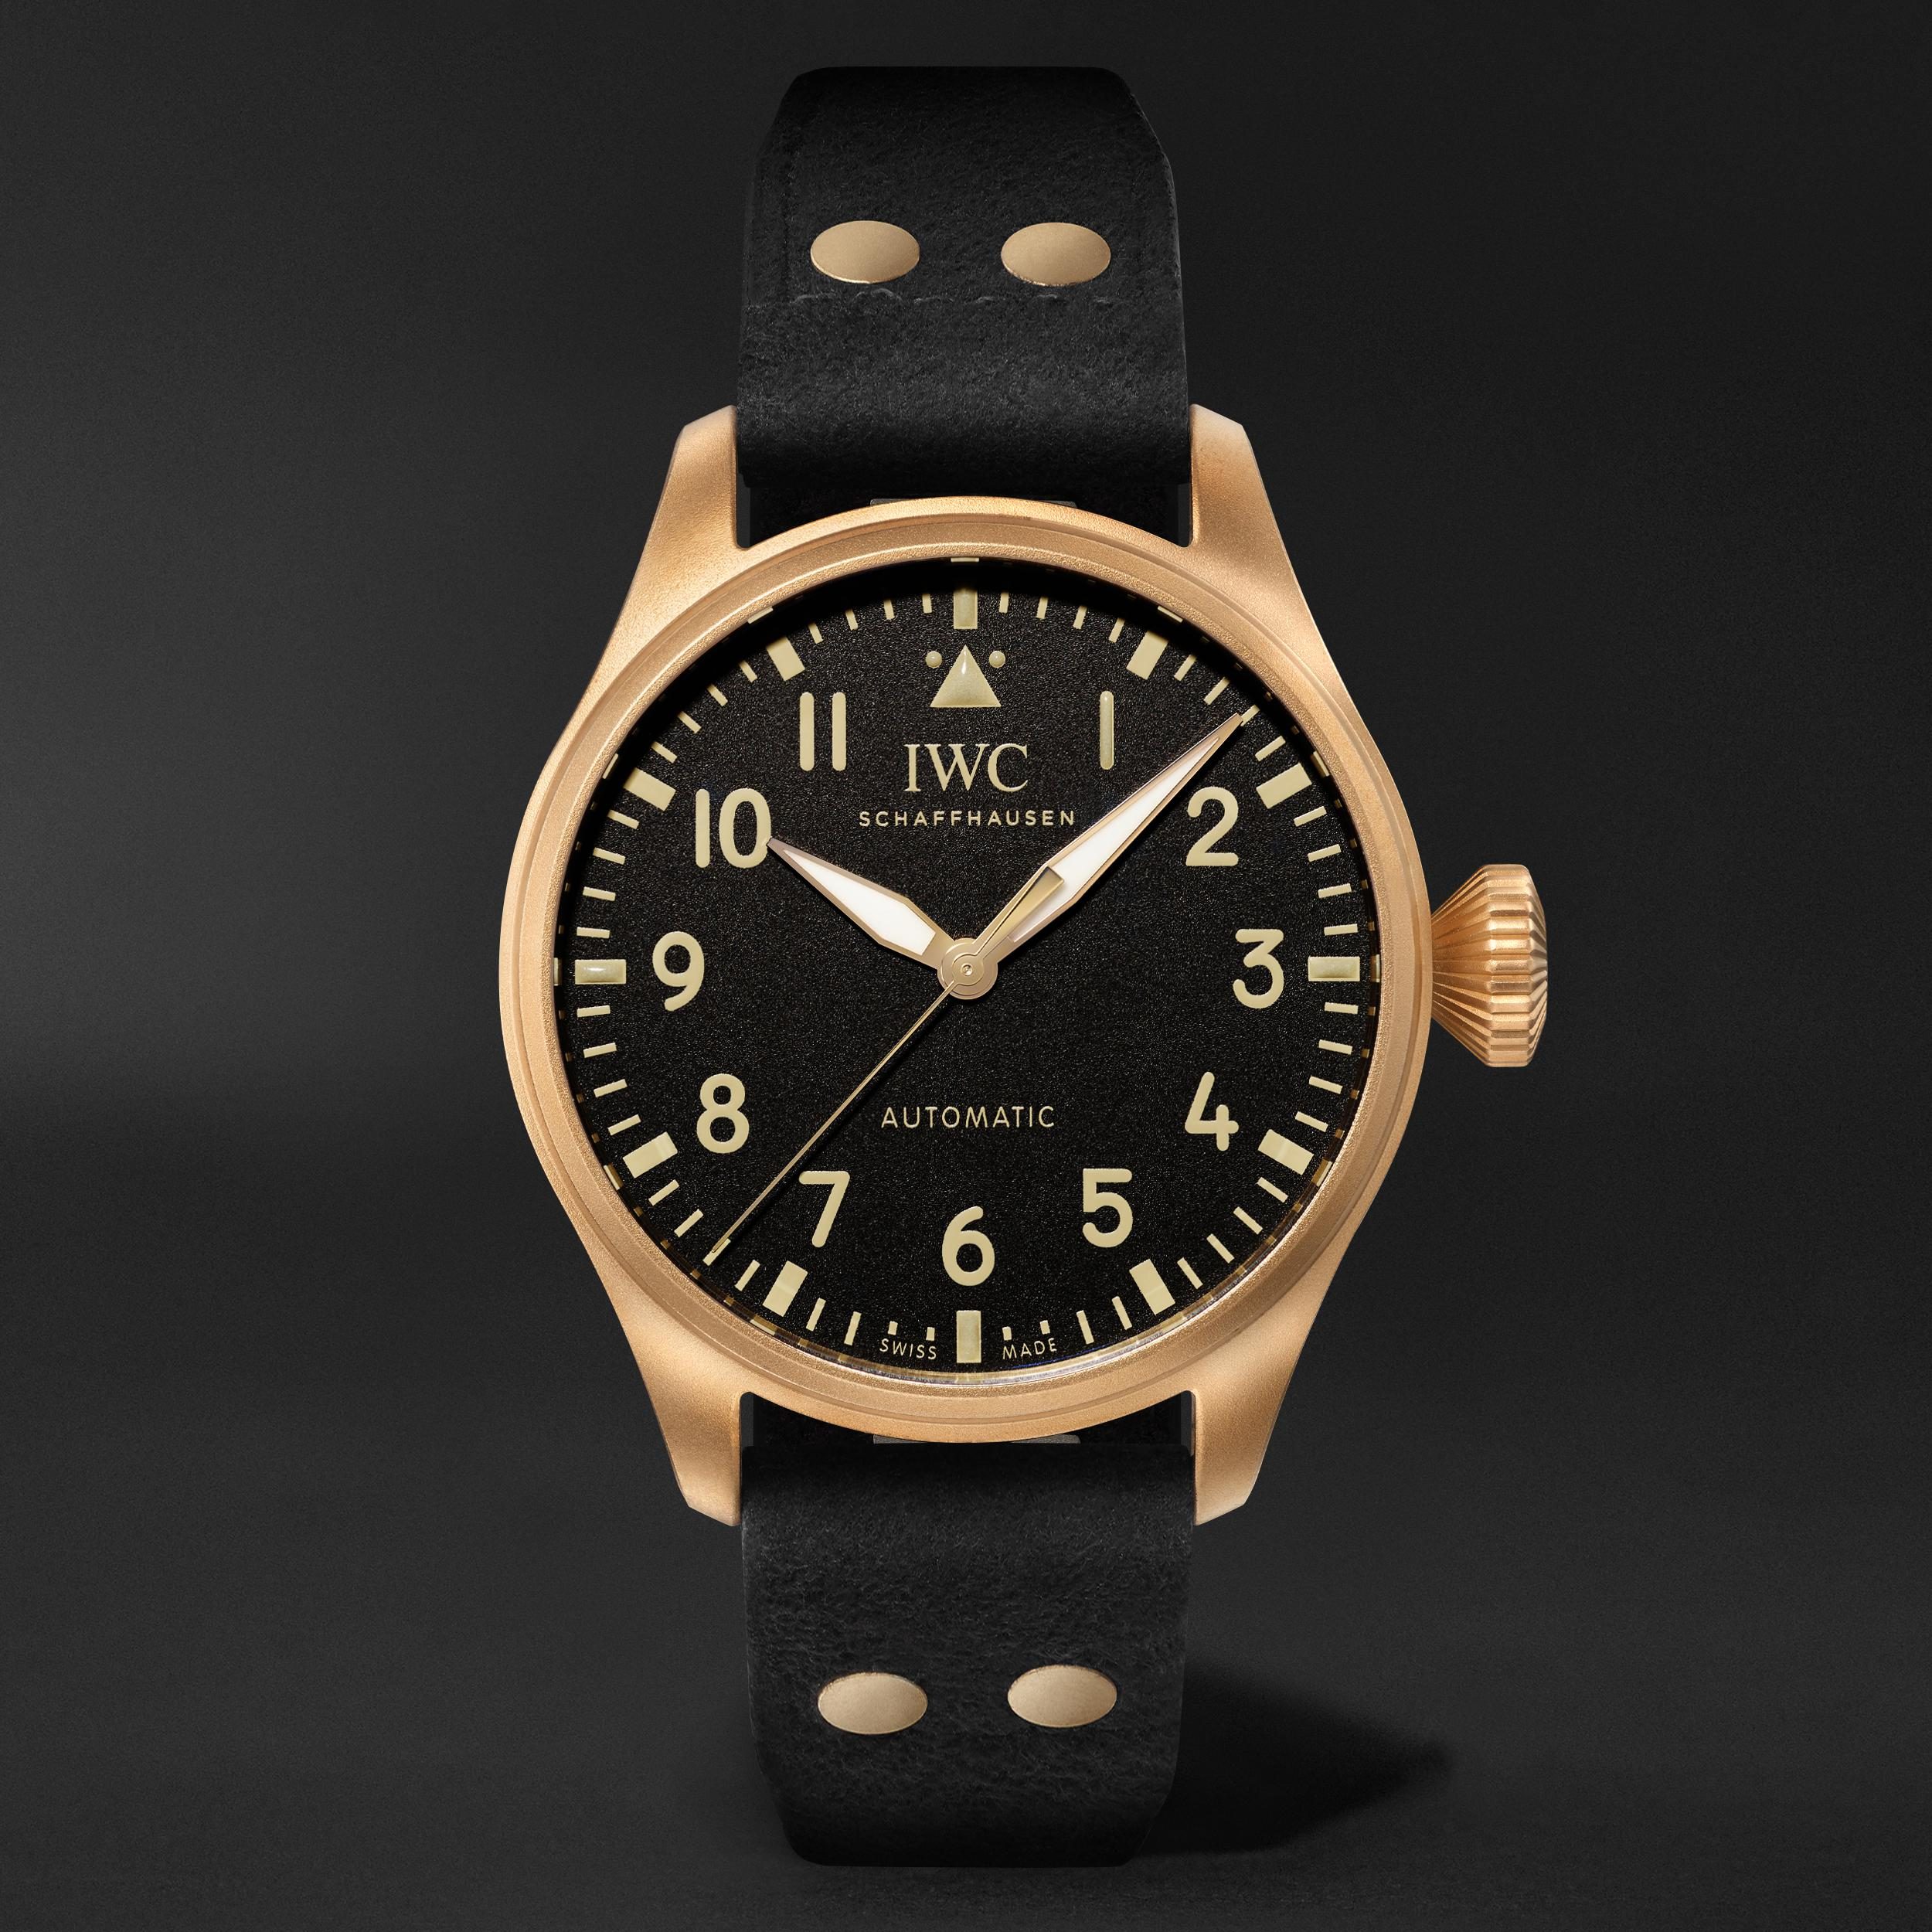 Mr Porter And IWC Schaffhausen Create Limited Edition Watch